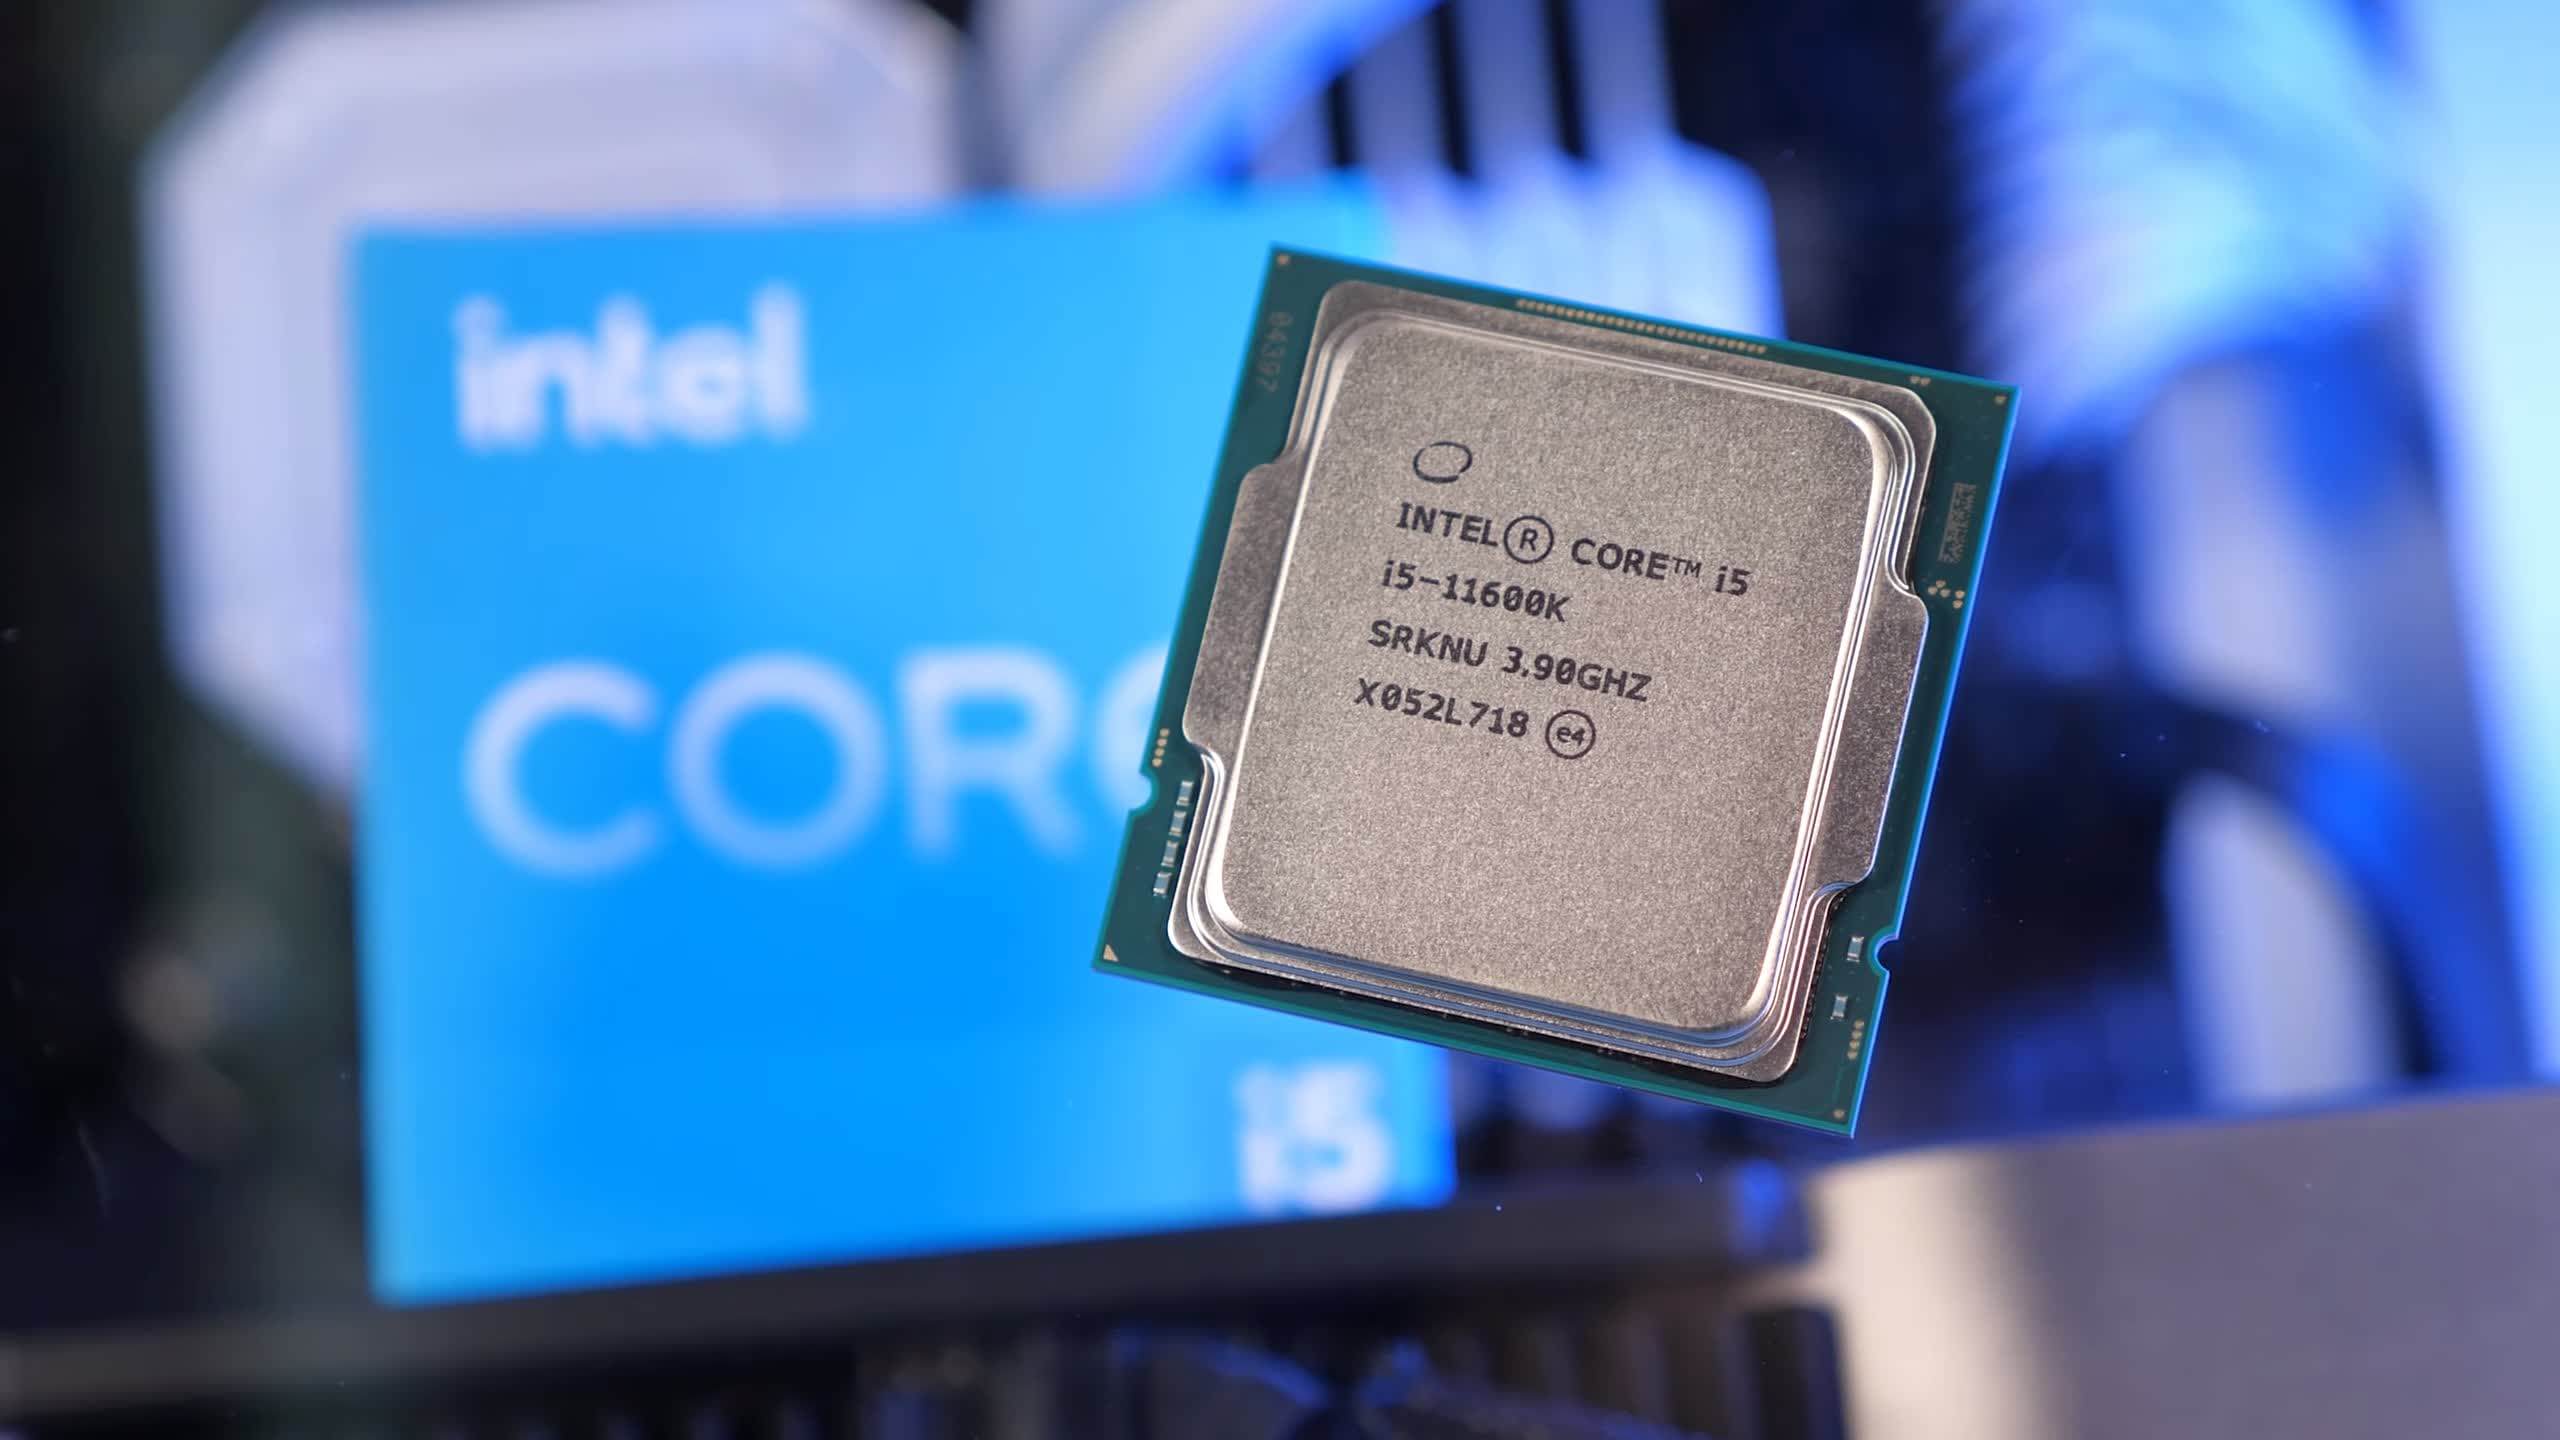 6 Core 11th Gen i5-11600K Hexa-core Retail Pack Intel Core i5 3.90 GHz Processor 